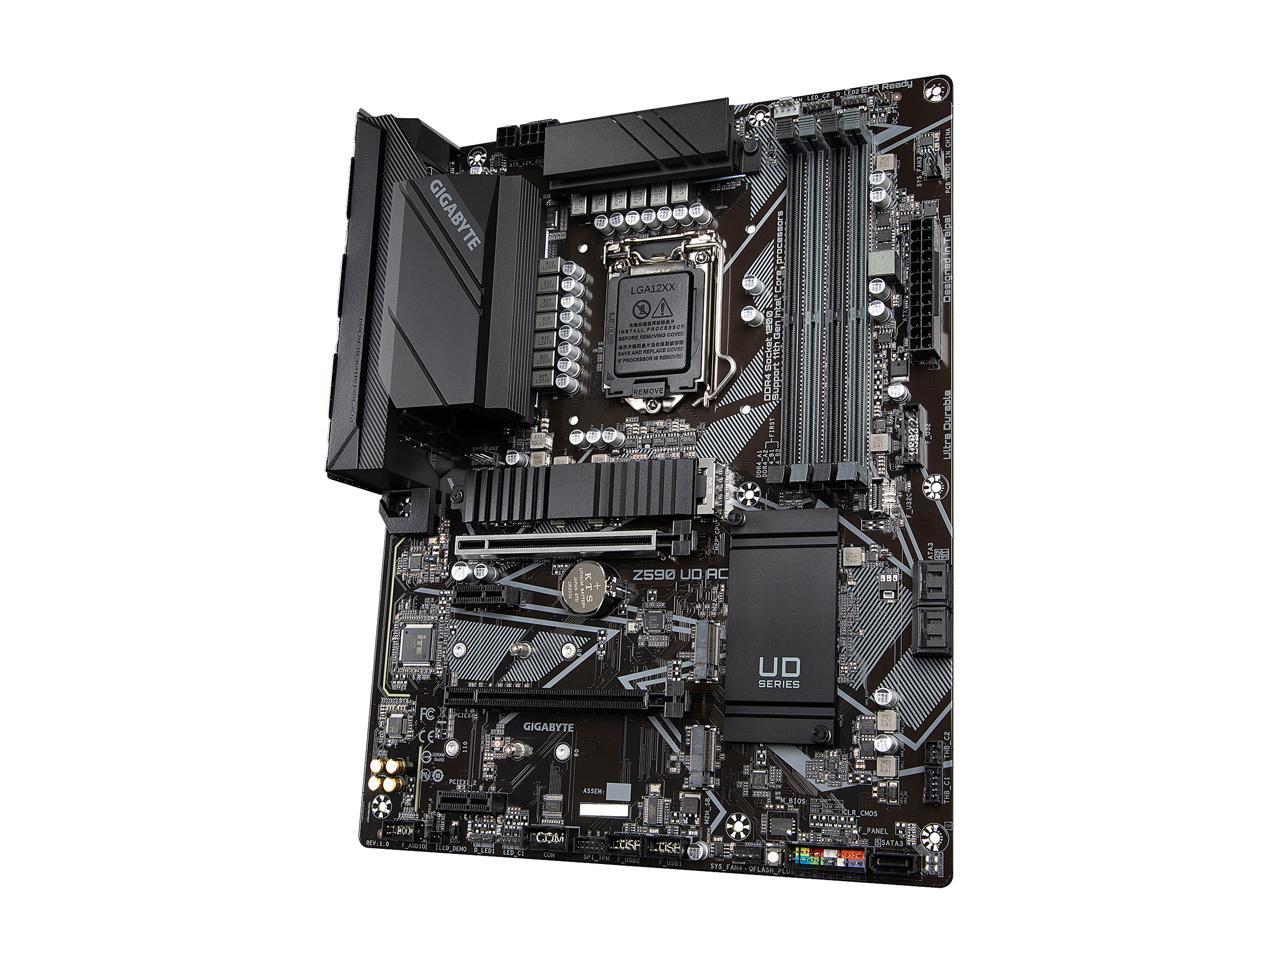 Gigabyte Z590 Ud Ac Lga 1200 Intel Z590 Atx Motherboard With Triple M.2, Pcie 4.0, Usb 3.2 Gen 2, Intel Wireless-Ac, 2.5Gbe Lan